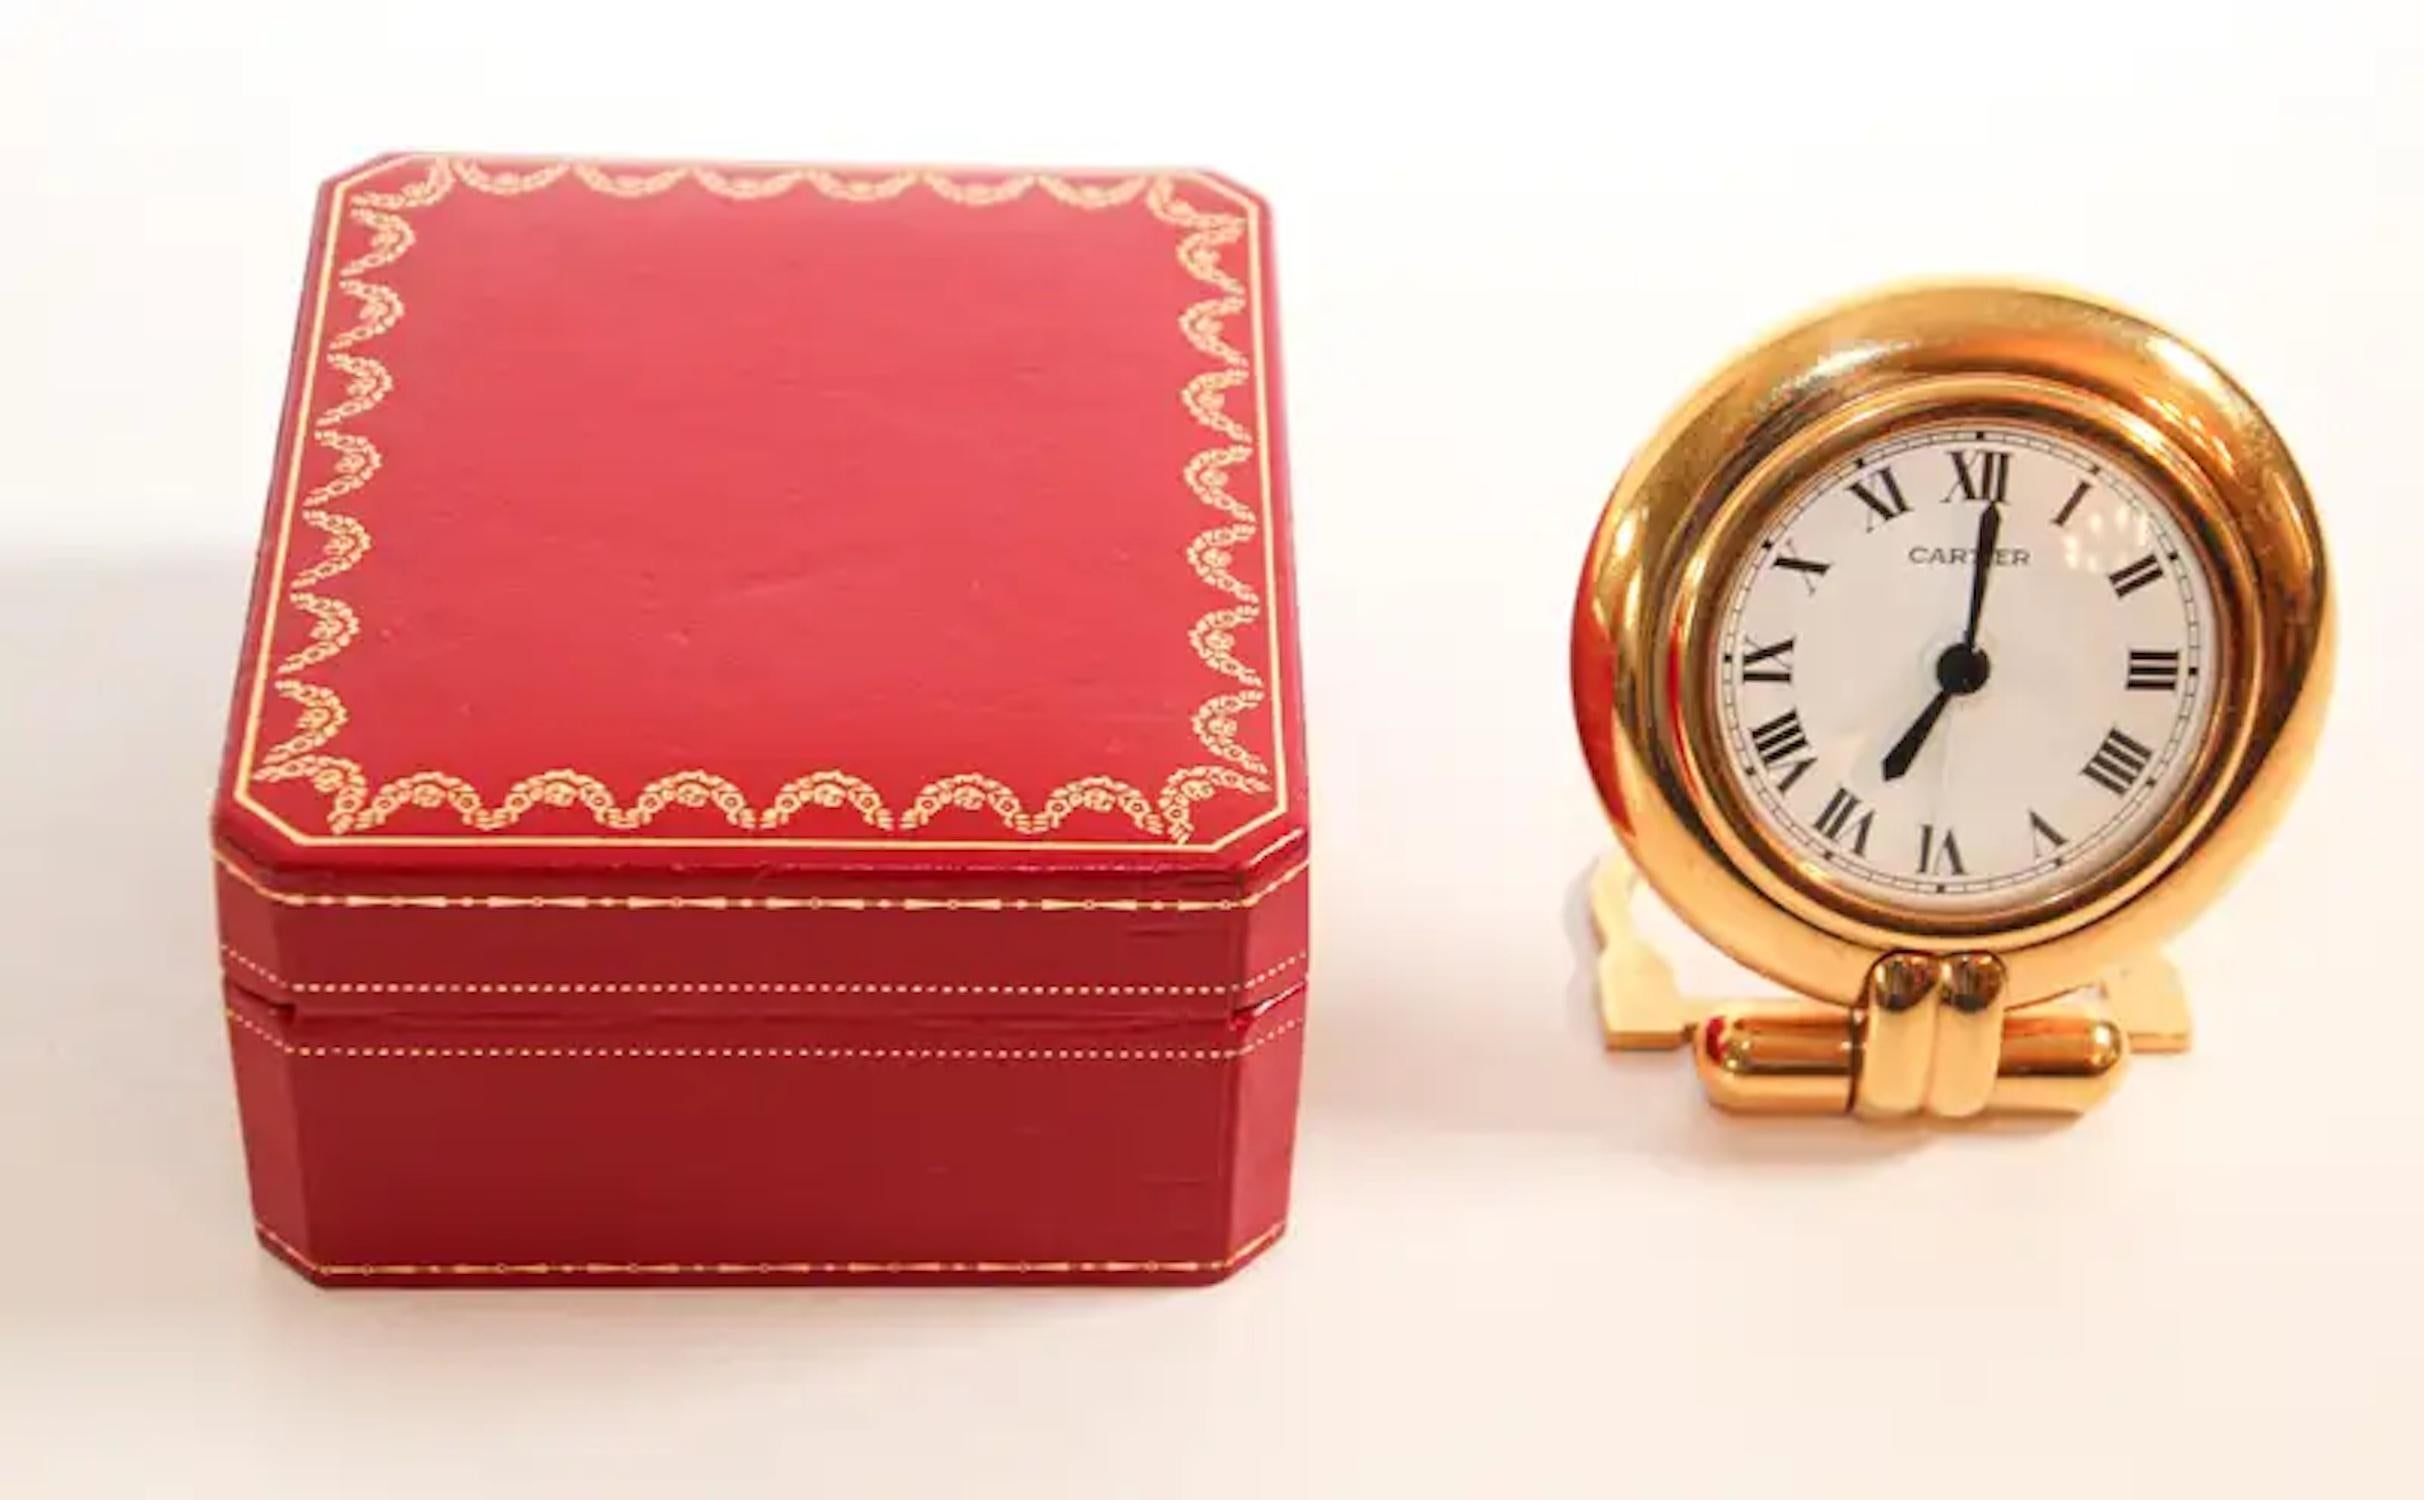 Cartier Colisee Art Deco Travel Desk Clock 24-Karat Gold-Plated 2